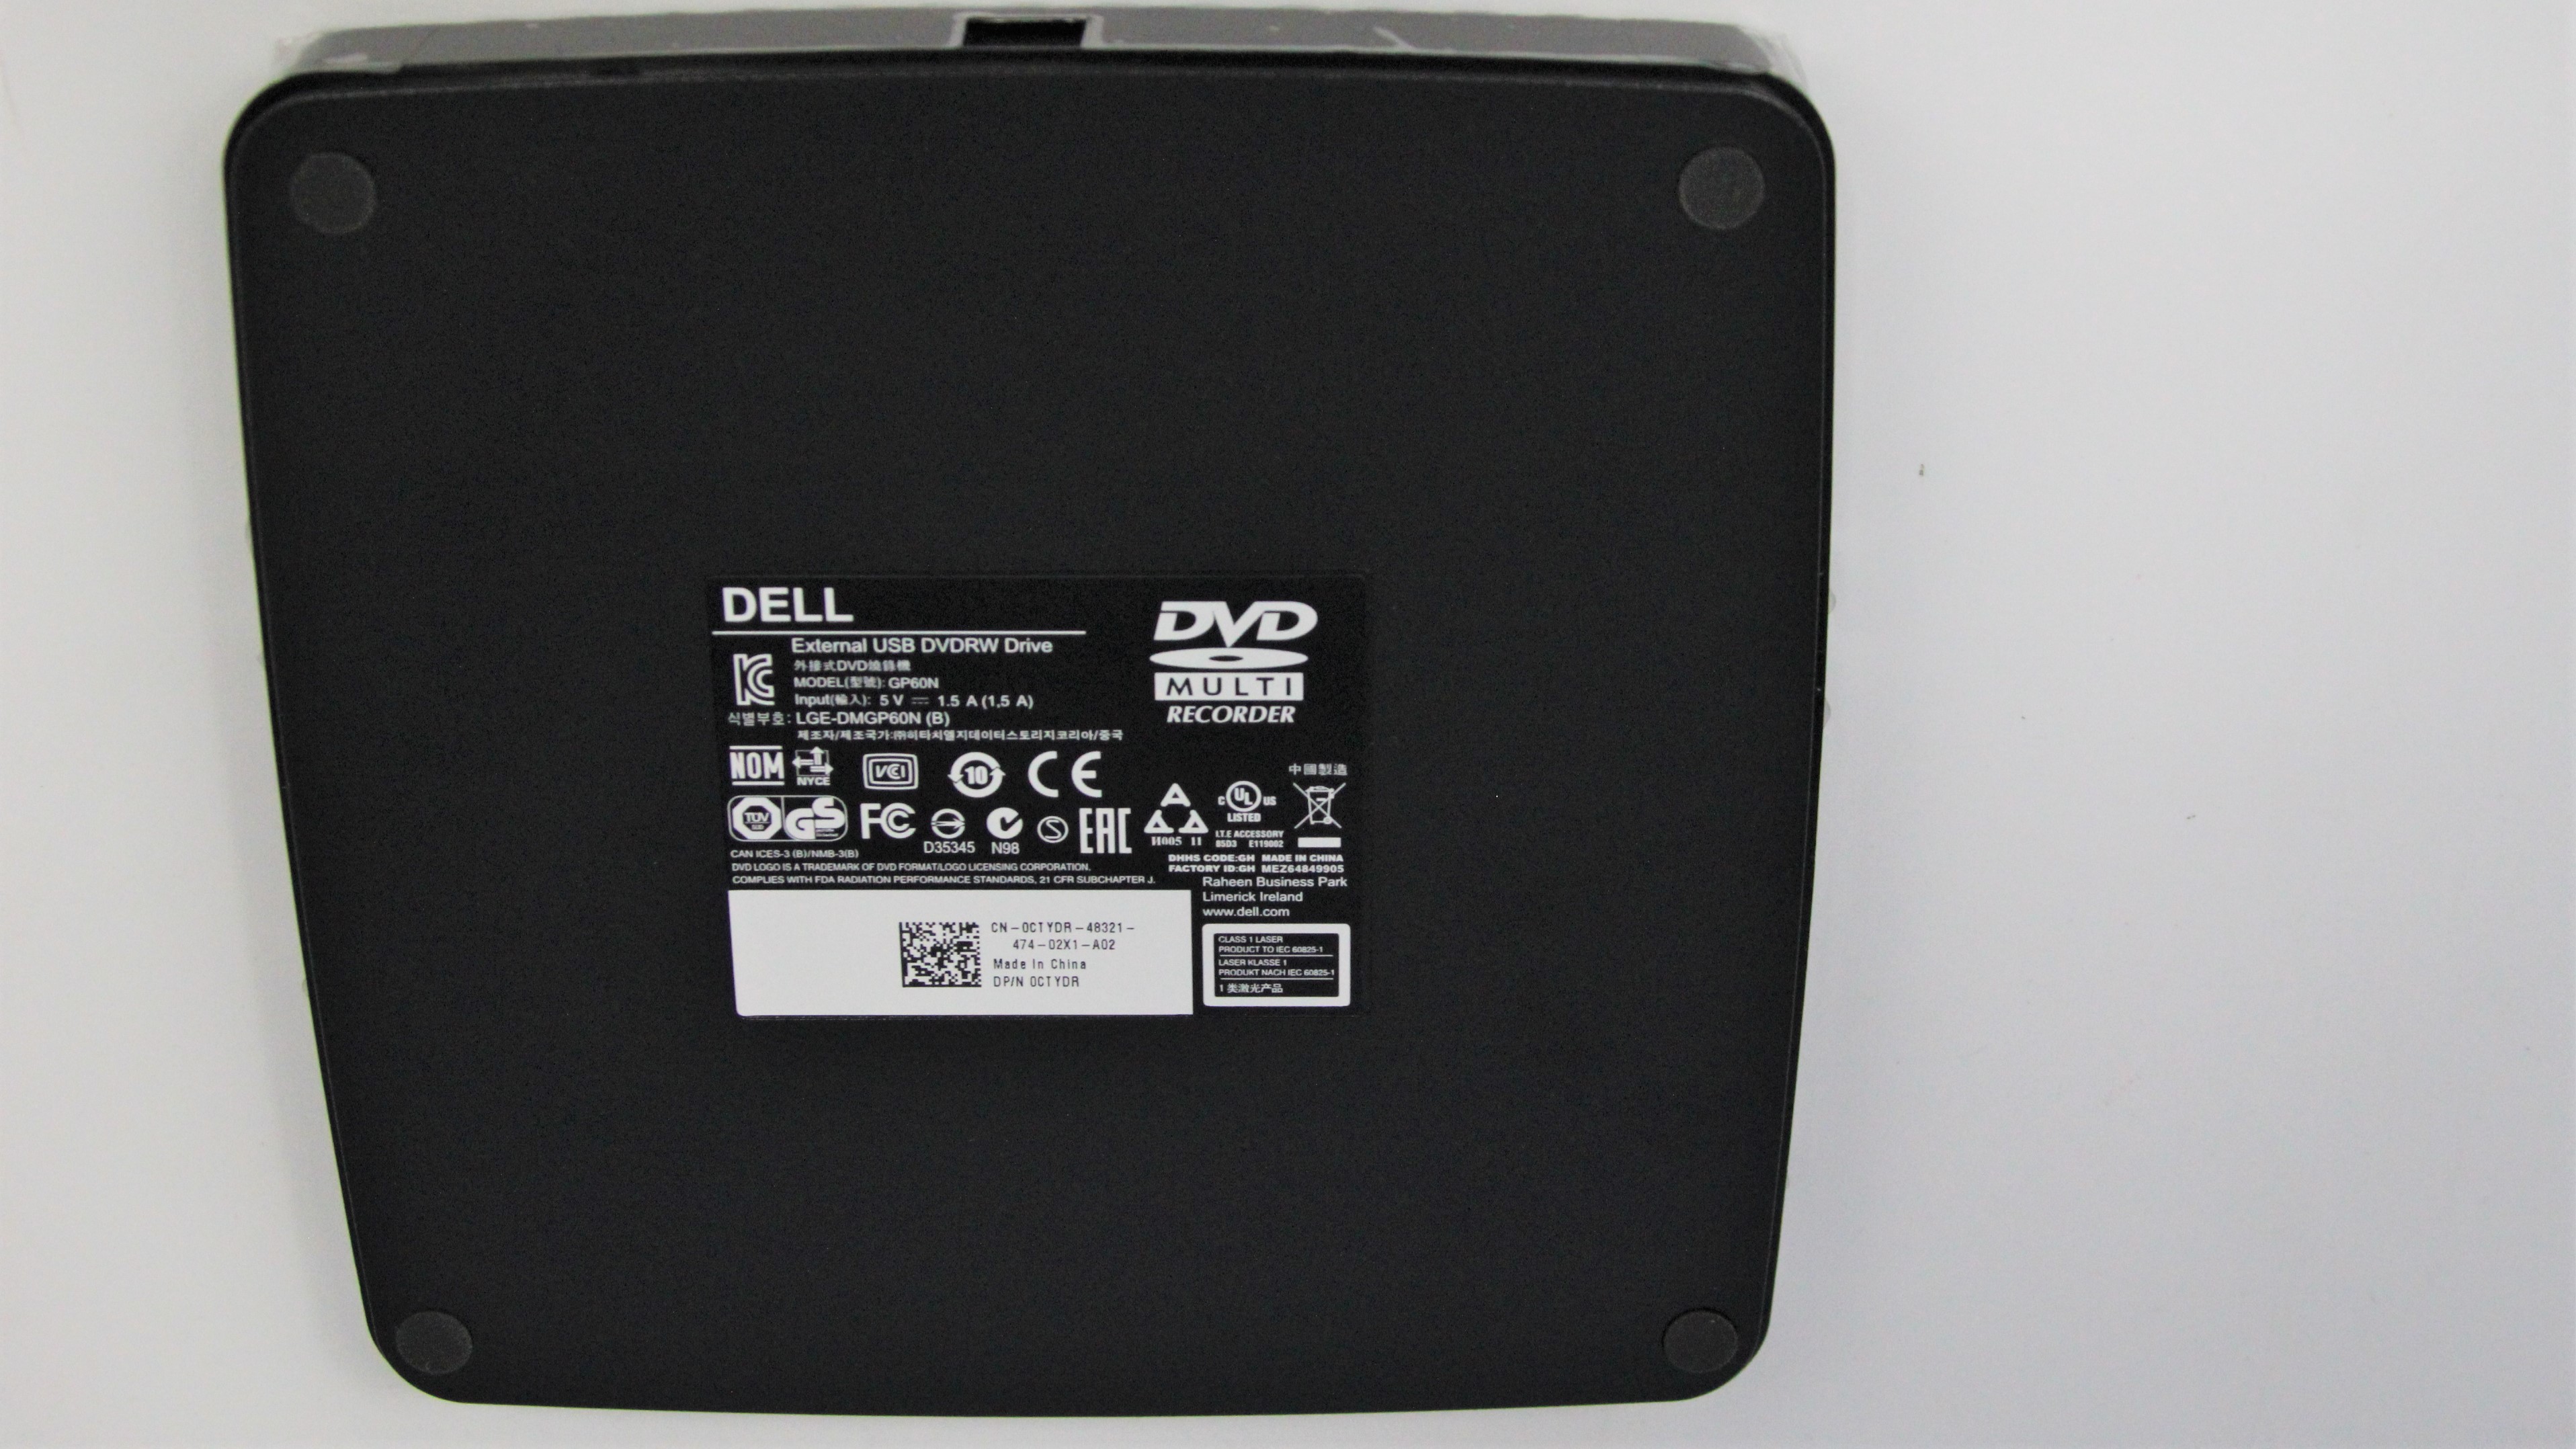 NEW Dell 0CTYDR External USB 8X DVD RW Drive Portable Optical Burner Ultra-Slim